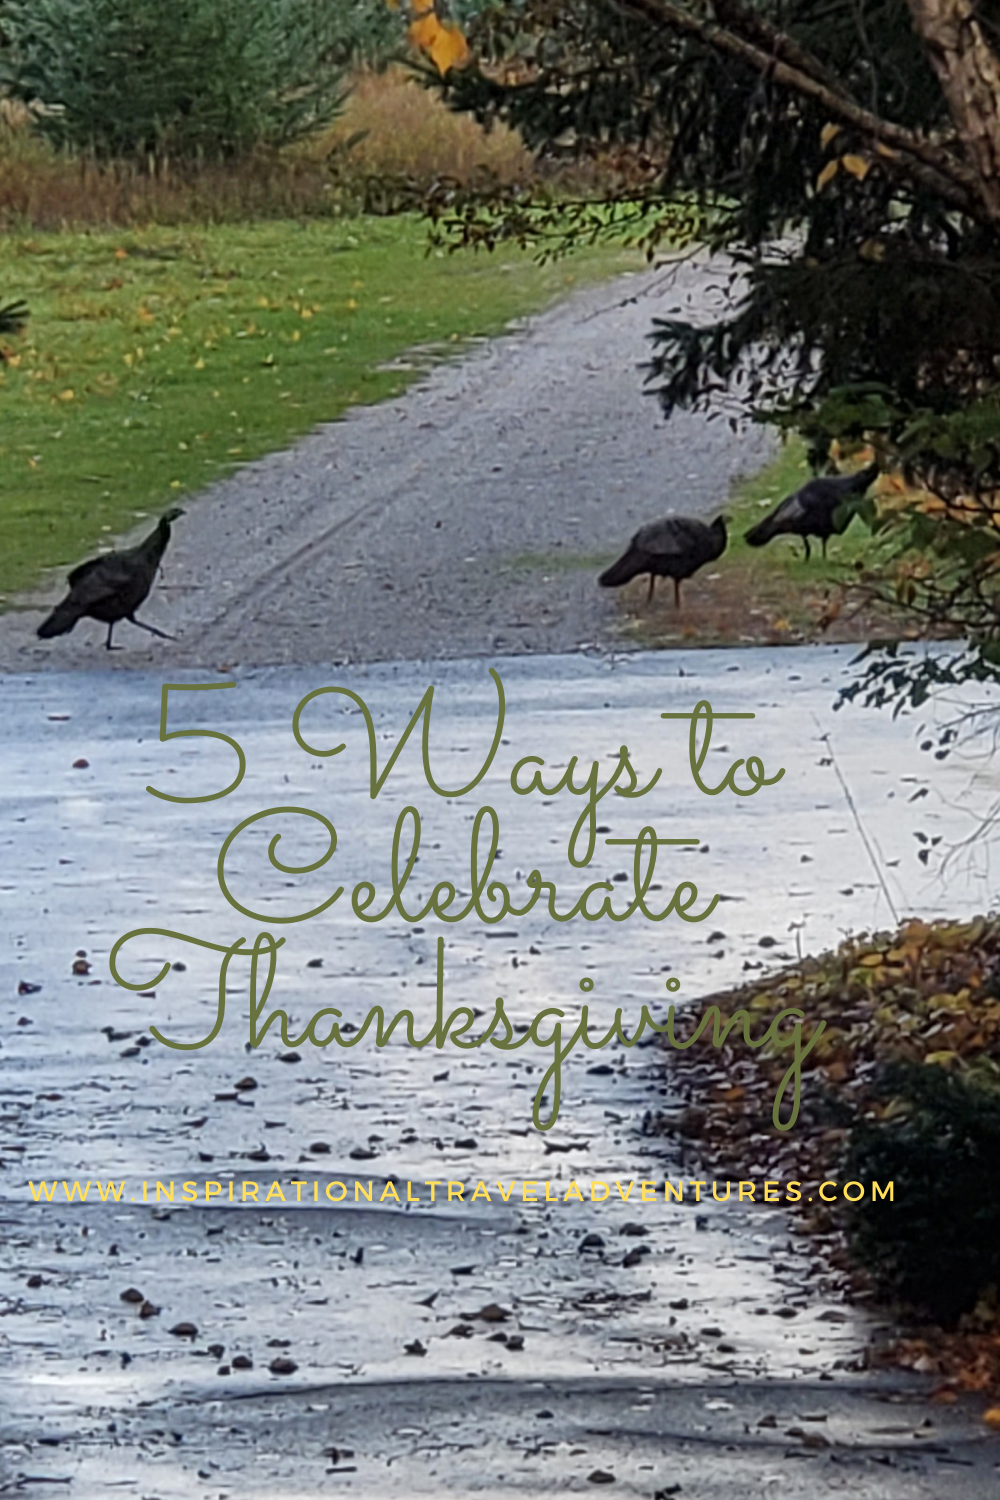 5 Ways to Celebrate Thanksgiving besides hosting a large gathering